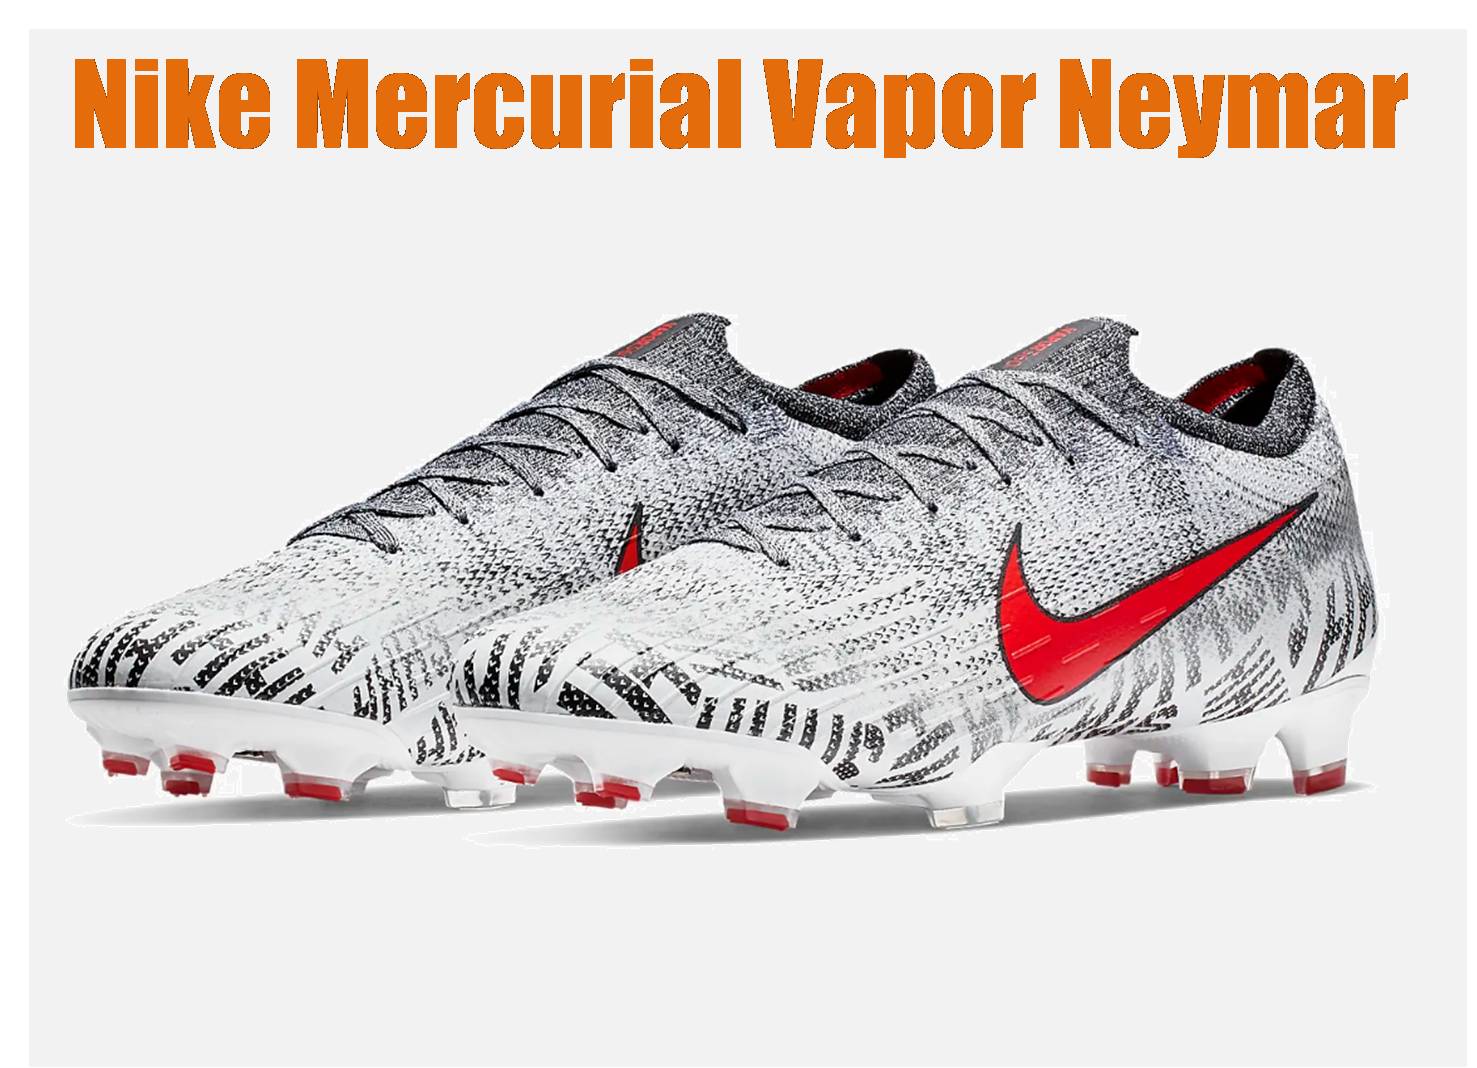 Nike_Mercurial_Vapor_Neymar_football_Shoes_Review